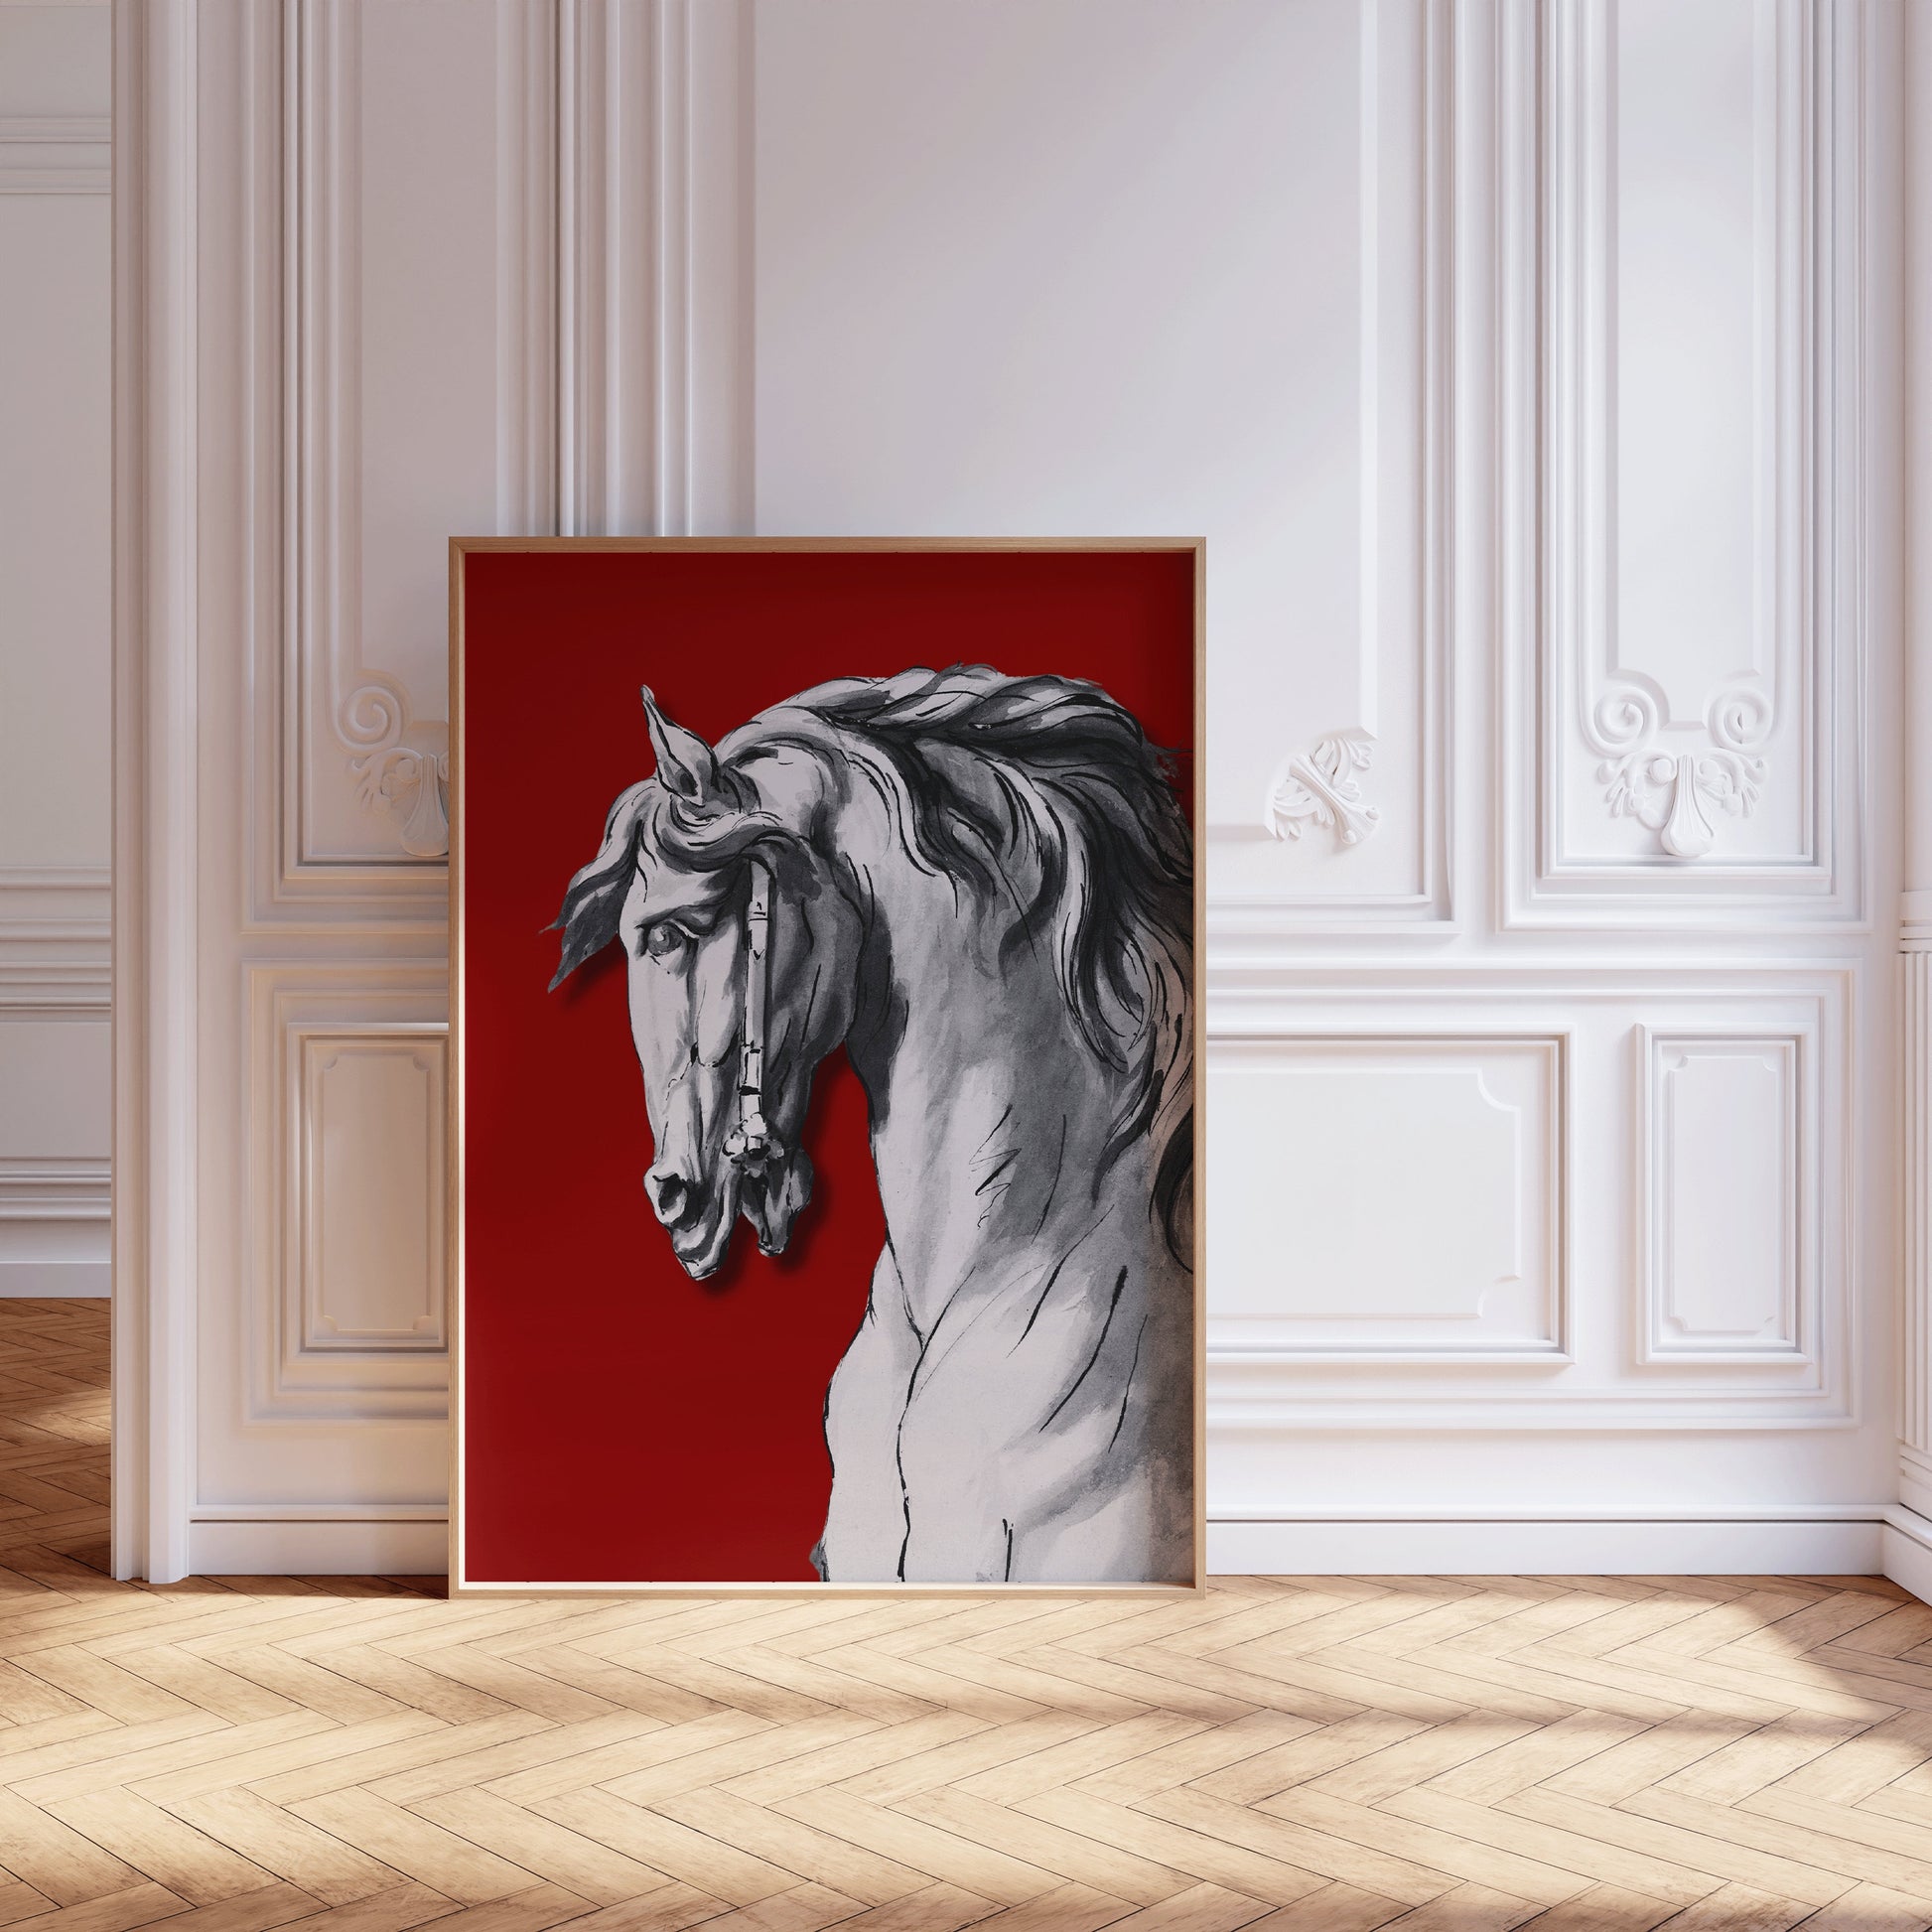 John Michael Rysbrack - Study of a Horse's Head | Vintage Art Pop Remix Poster (available framed or unframed)